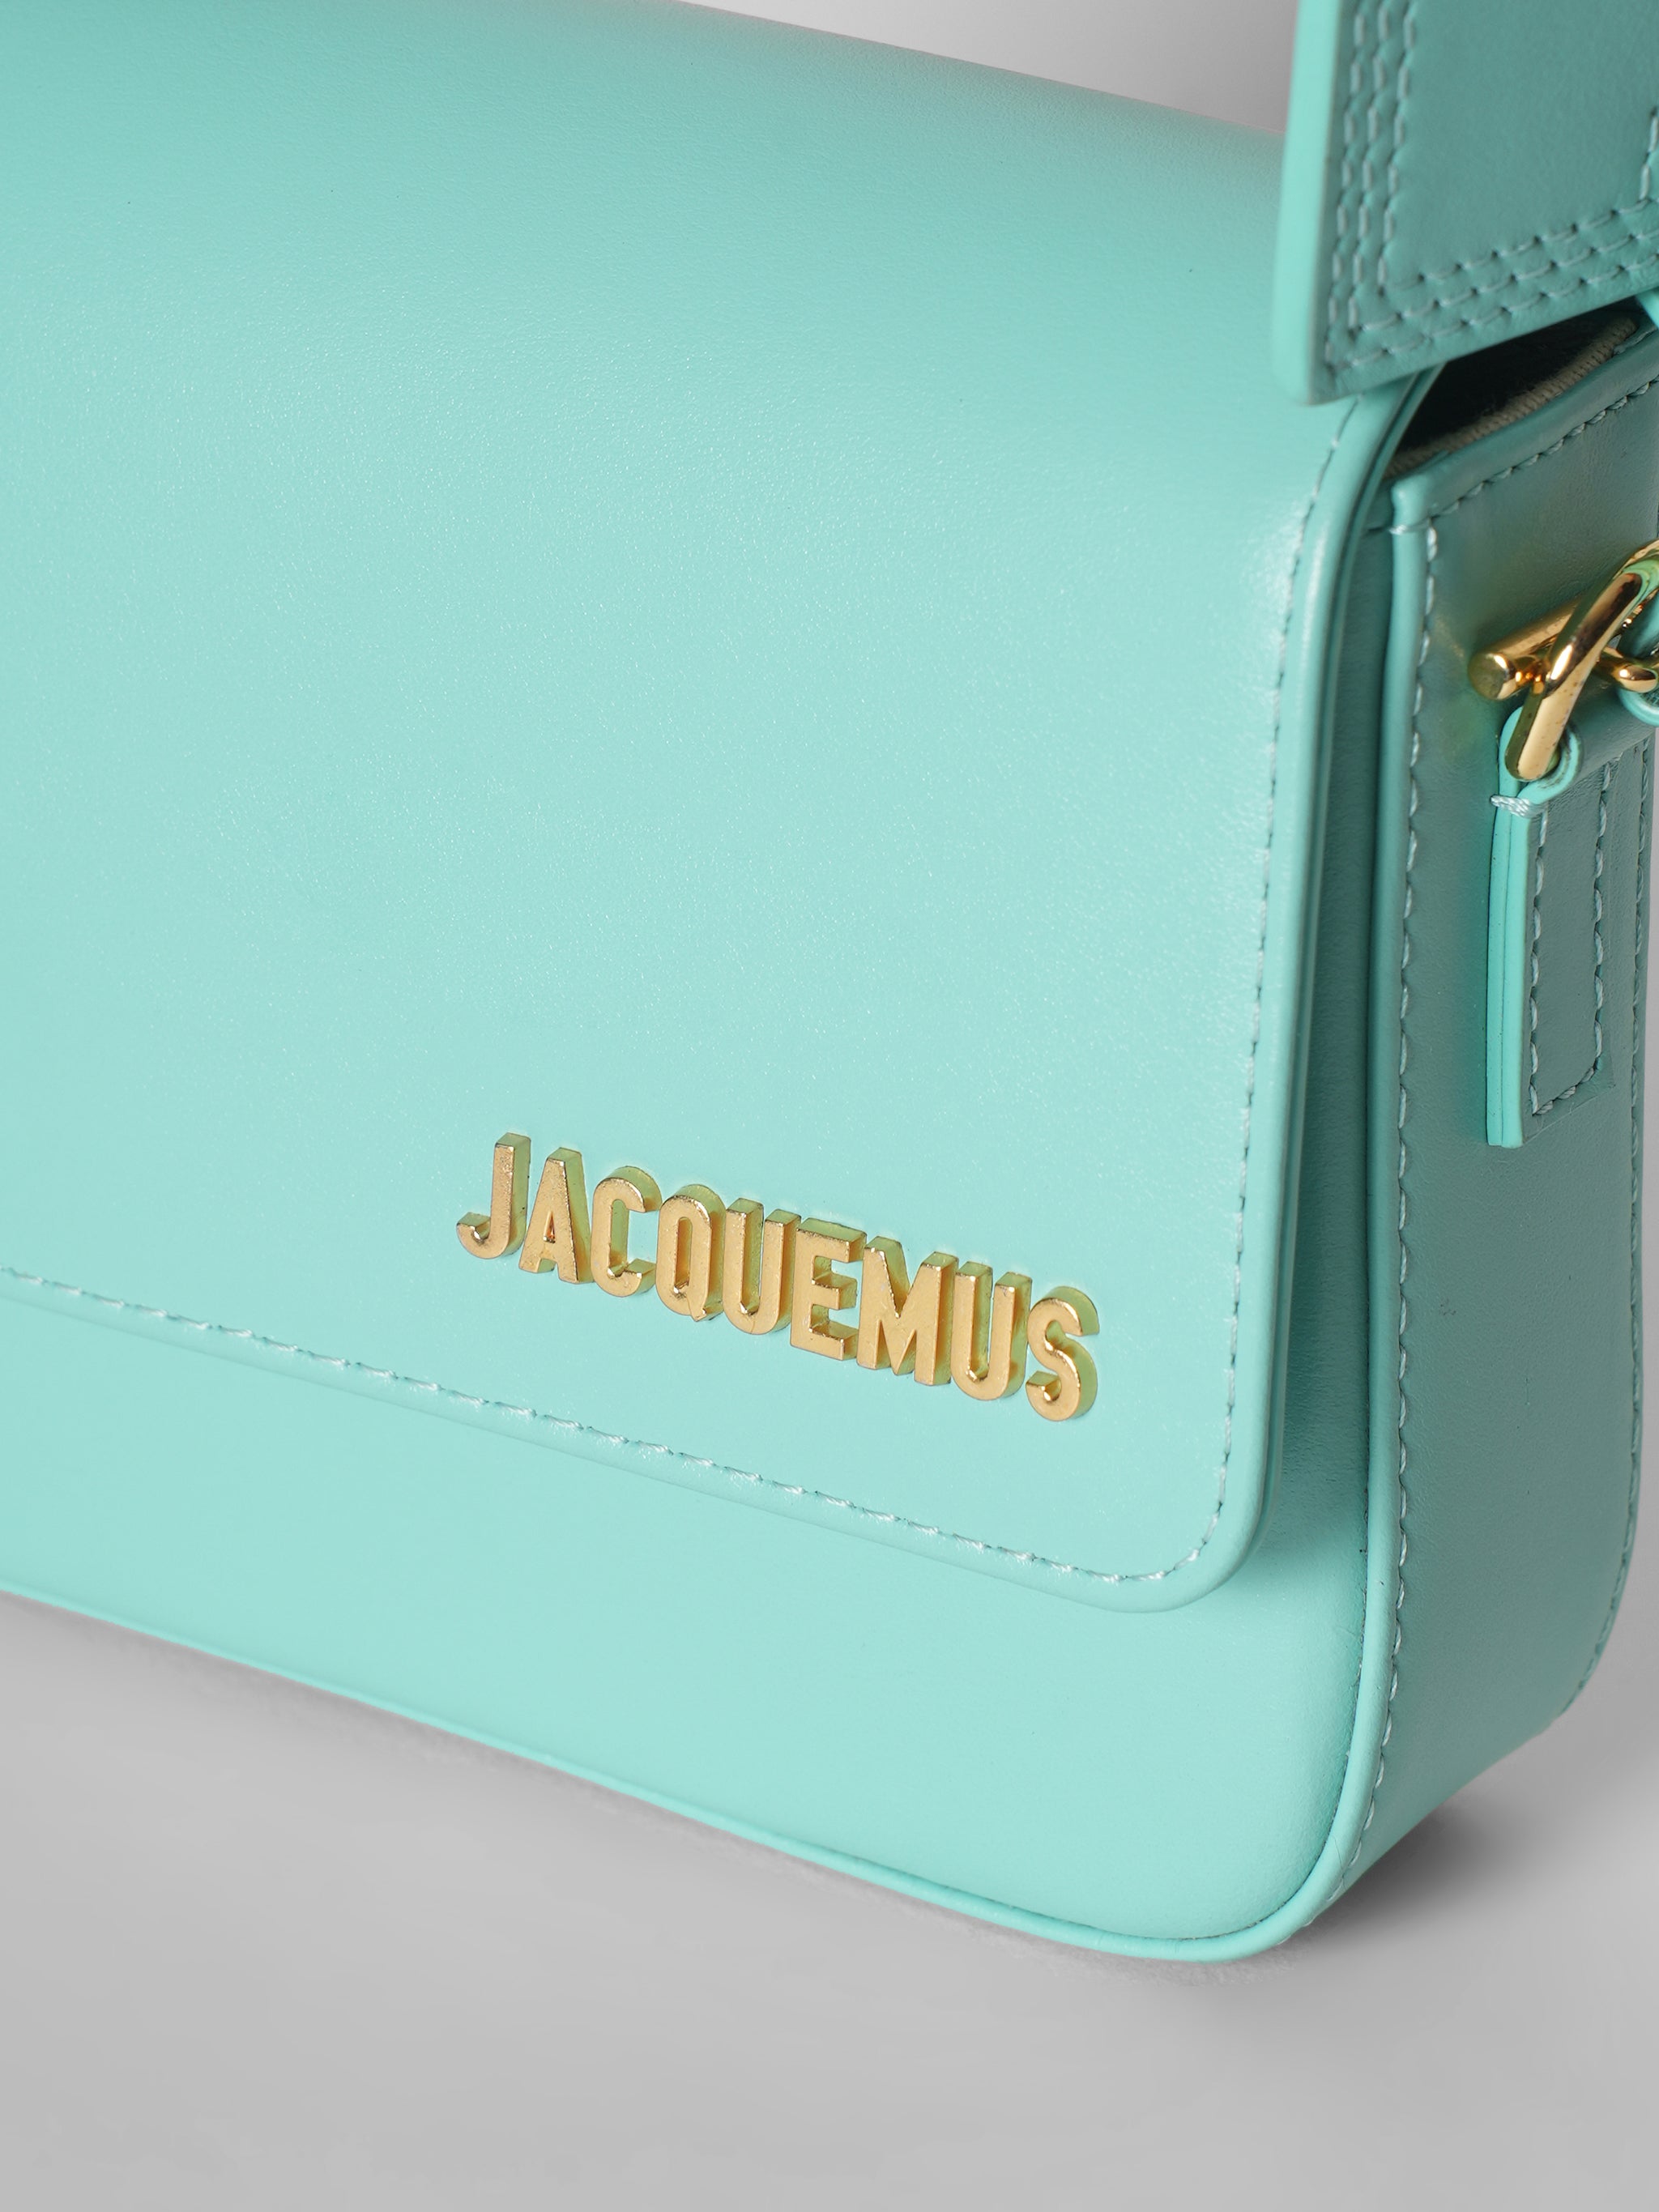 Jacquemus Le Carino Turquoise Bag